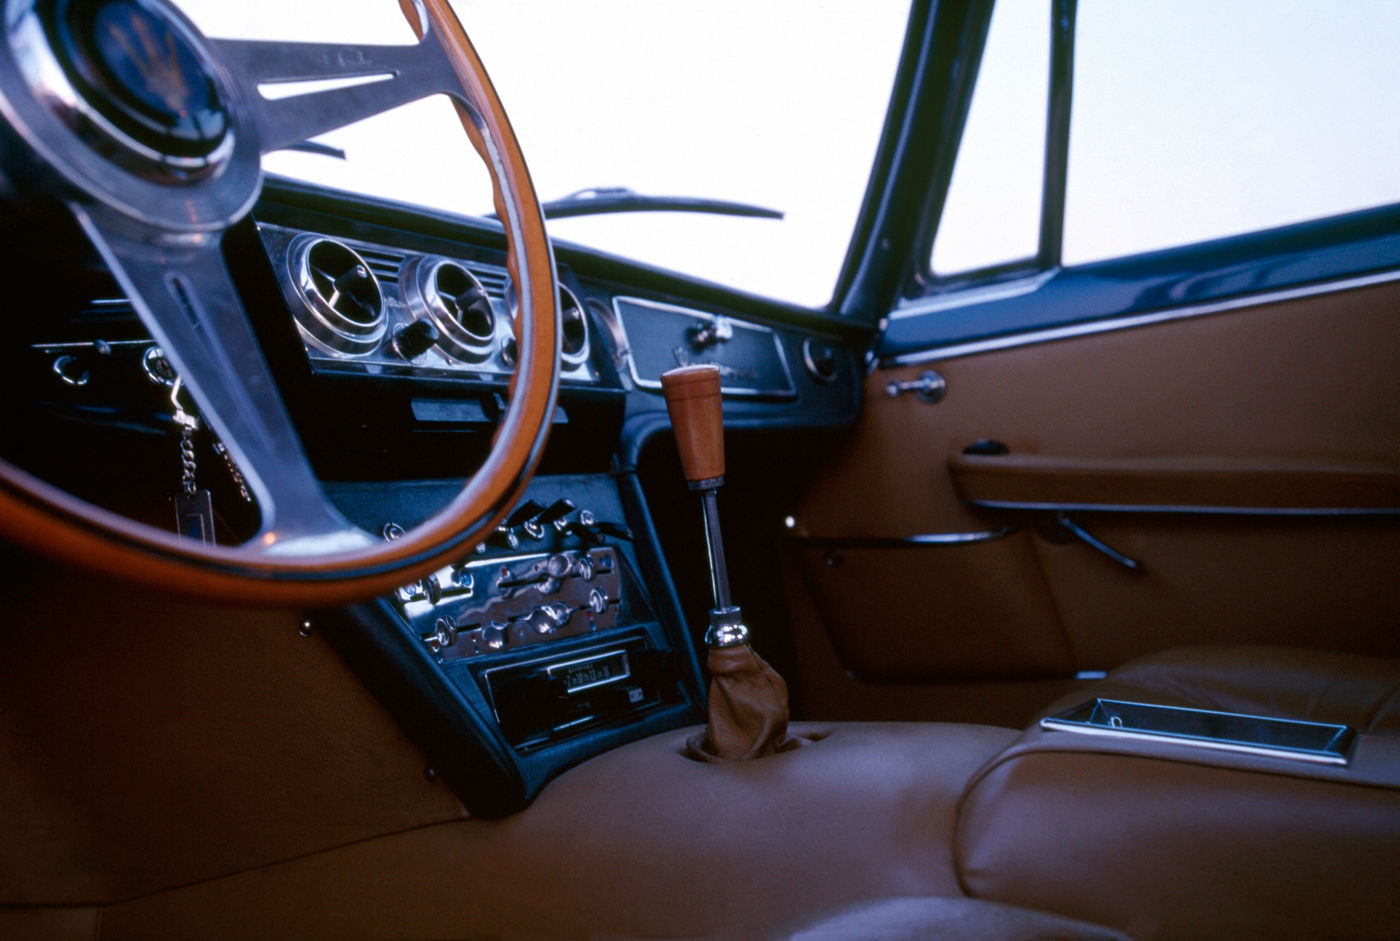 1966 Maserati Quattroporte I - Second Series - interior view of the 5-seater sedan